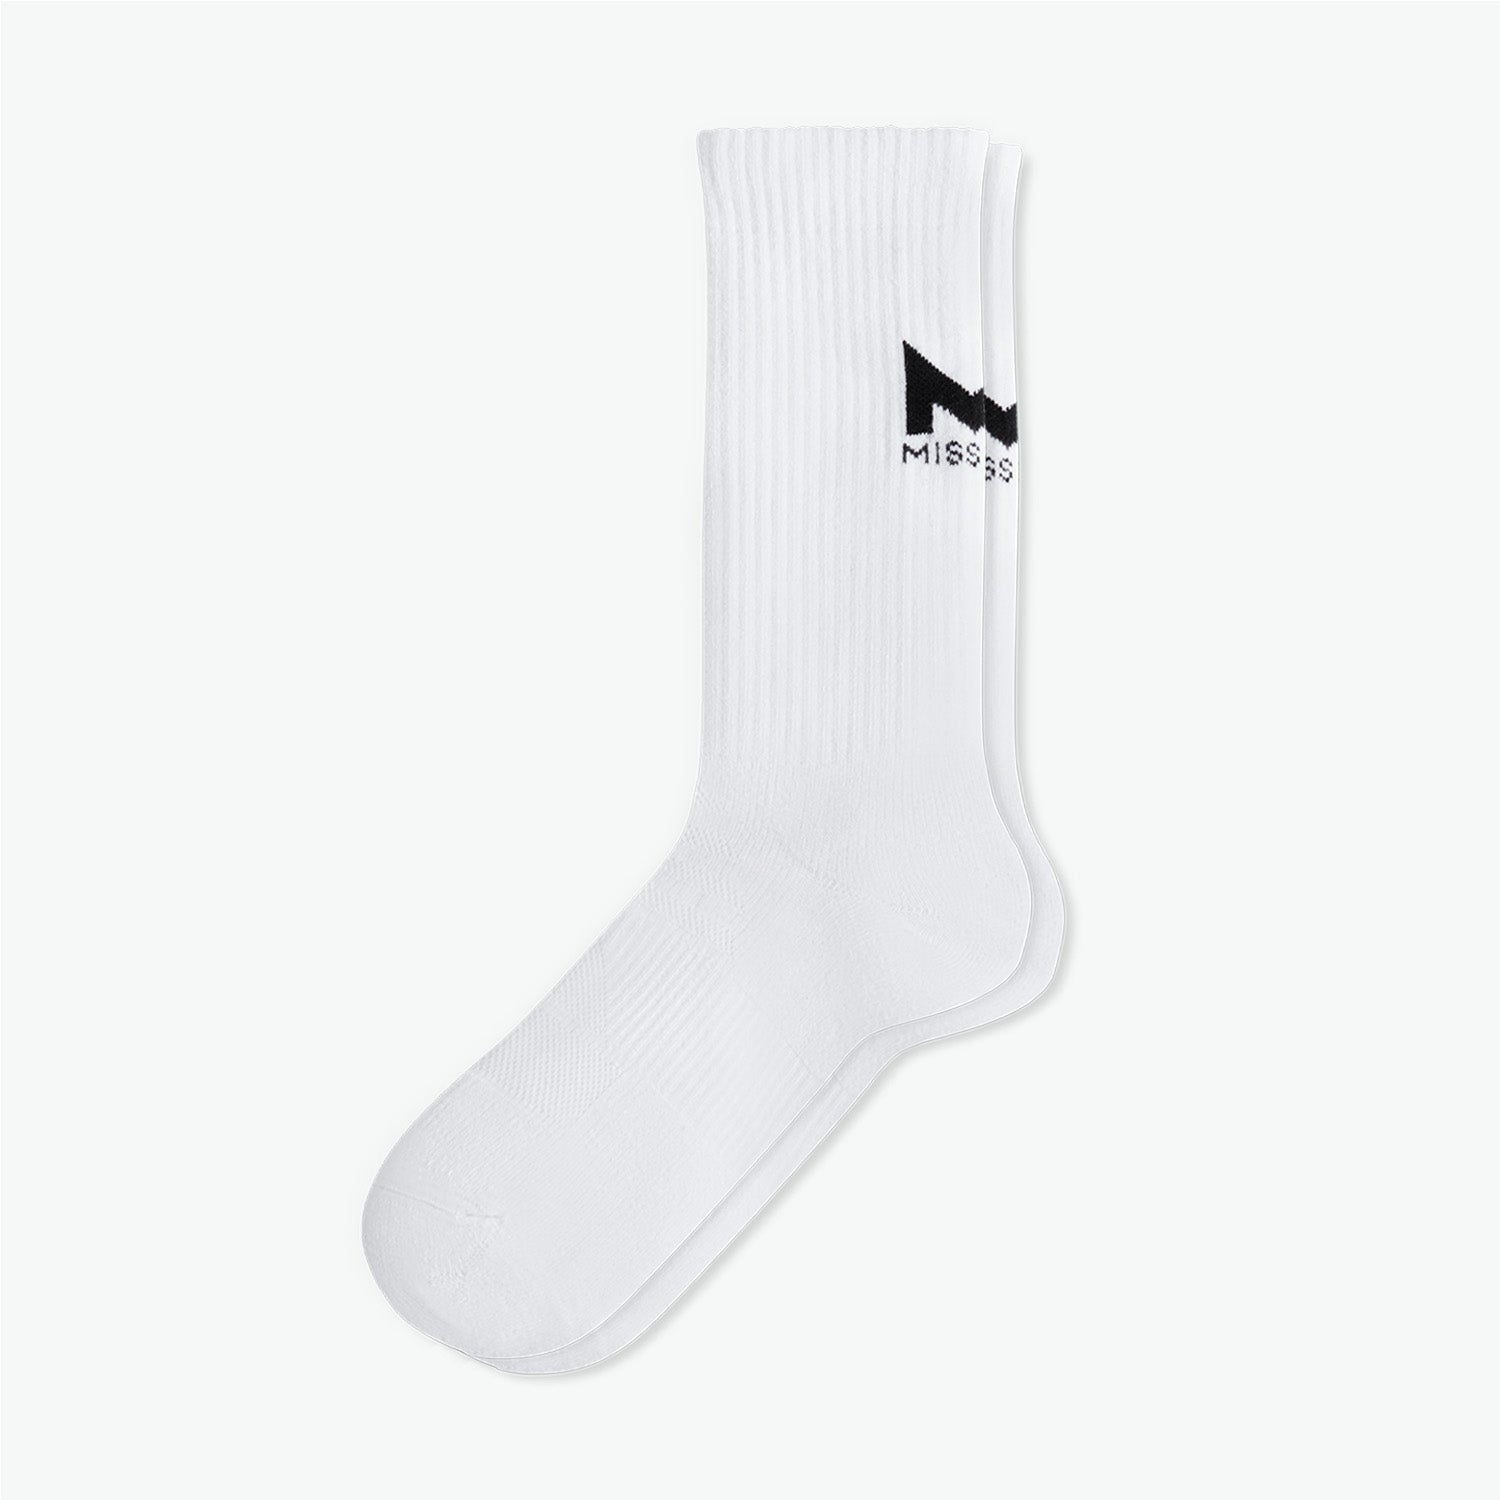 Pinnacle Dry Comfort Crew Socks Socks MISSION M  (US 6-8) White 